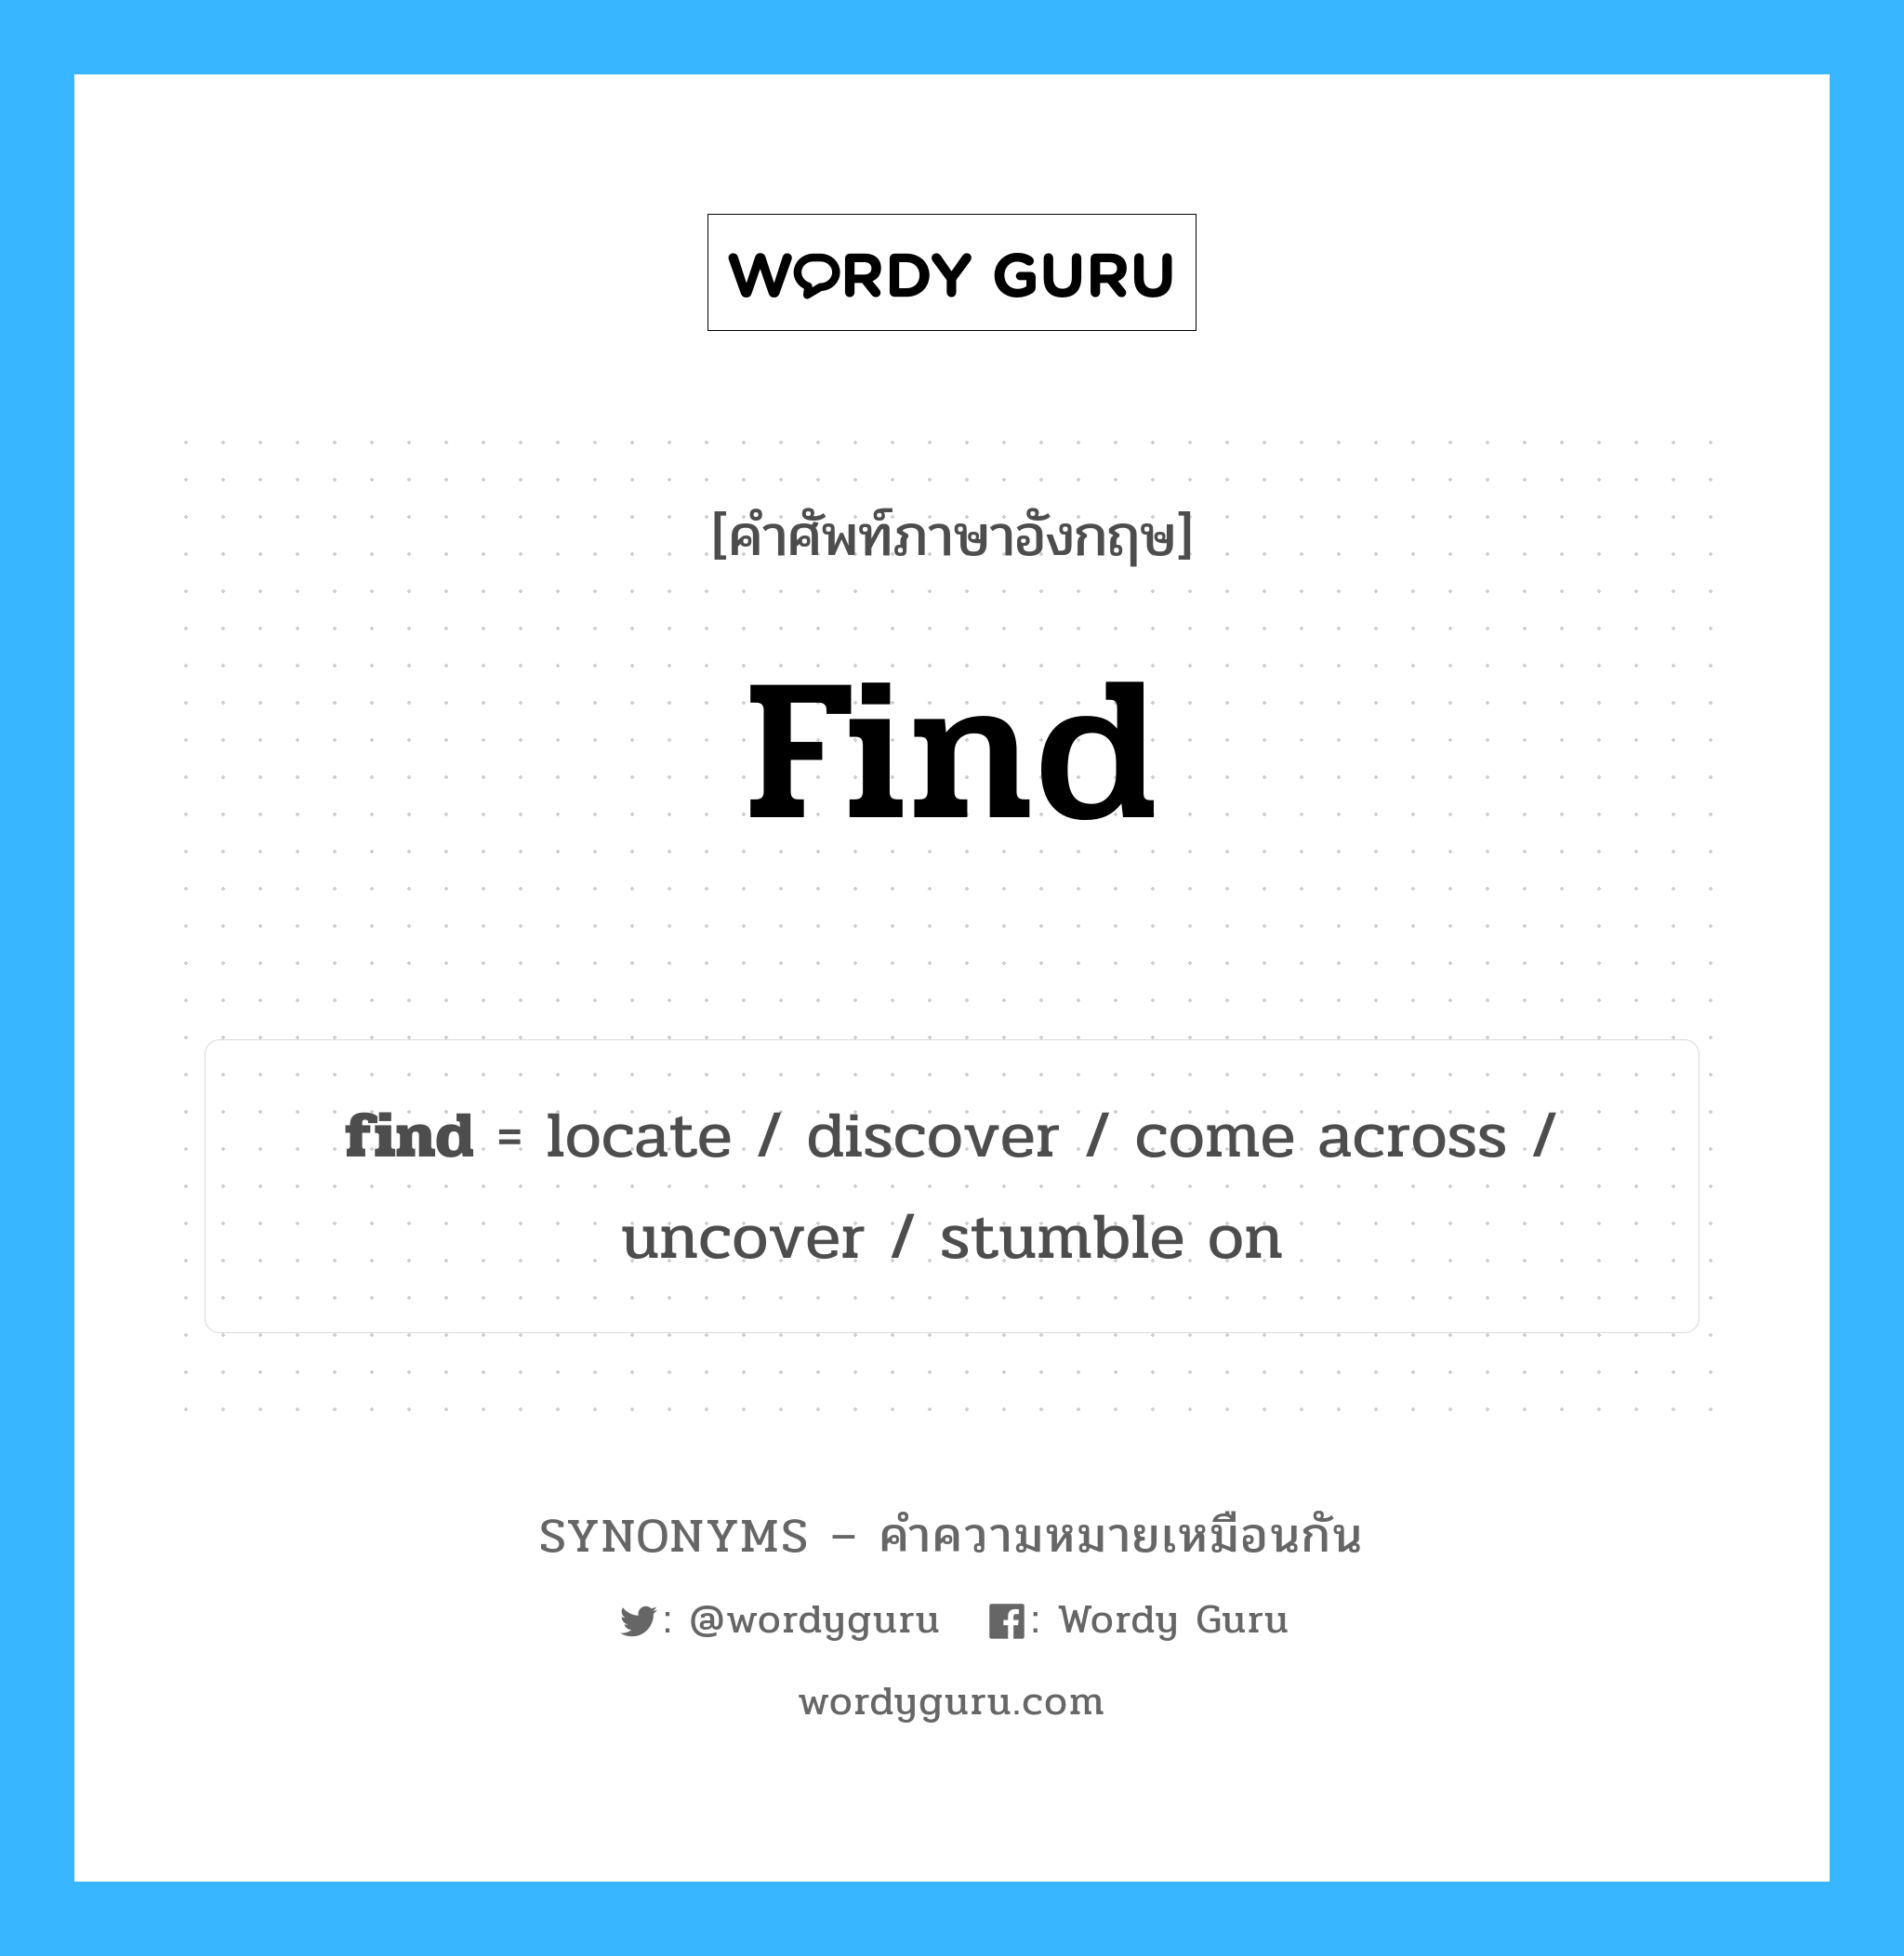 stumble on เป็นหนึ่งใน find และมีคำอื่น ๆ อีกดังนี้, คำศัพท์ภาษาอังกฤษ stumble on ความหมายคล้ายกันกับ find แปลว่า ใน หมวด find